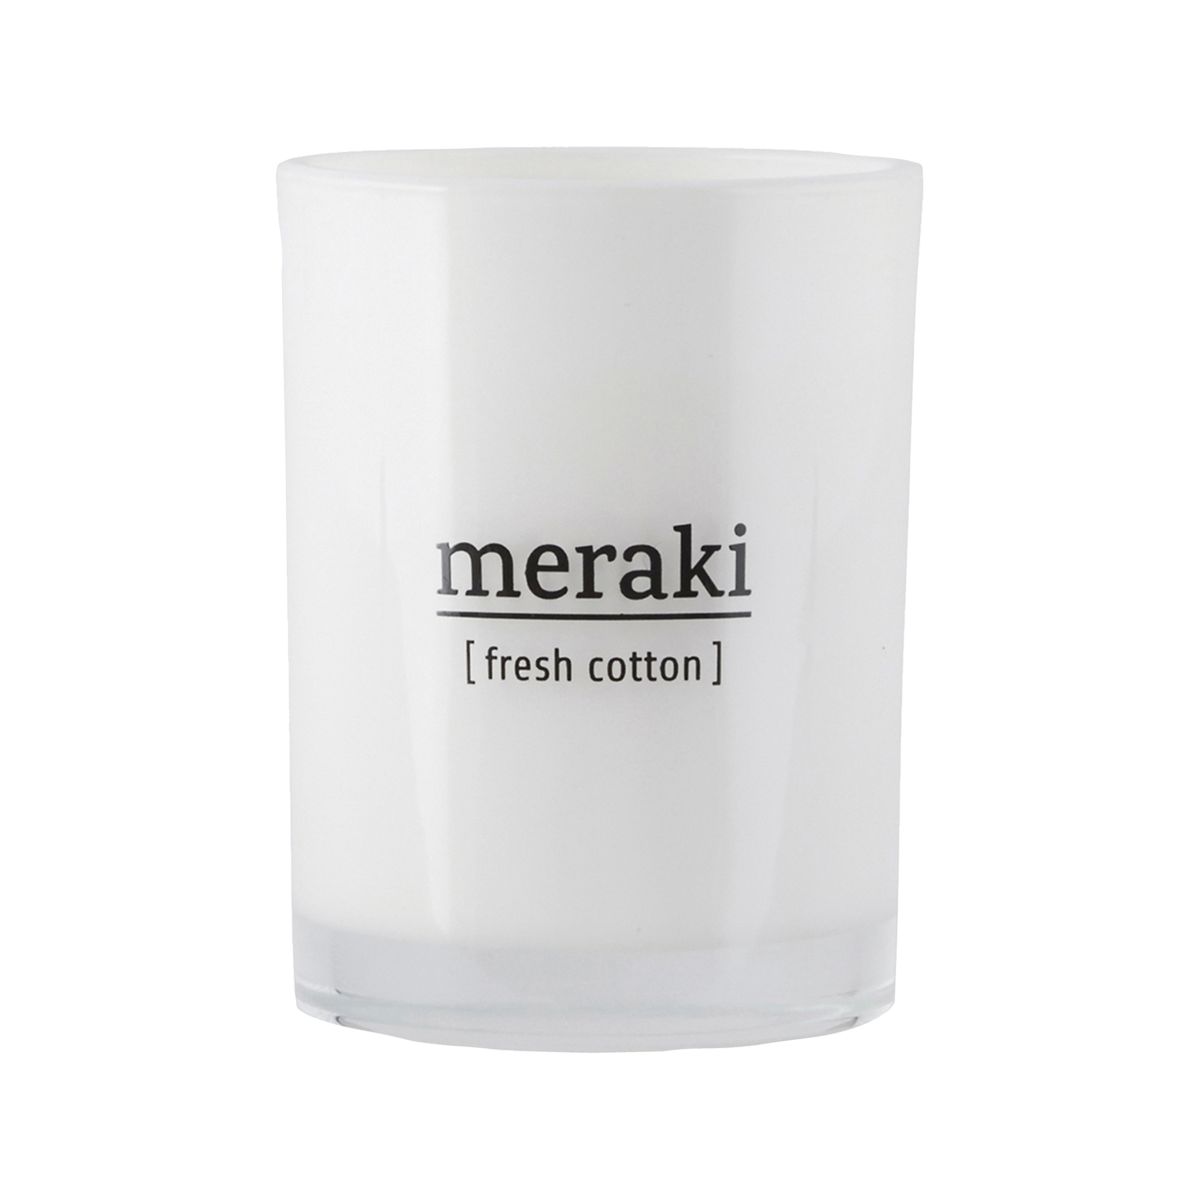 Scented candle, Meraki Fresh Cotton 12hr freeshipping - Generosa